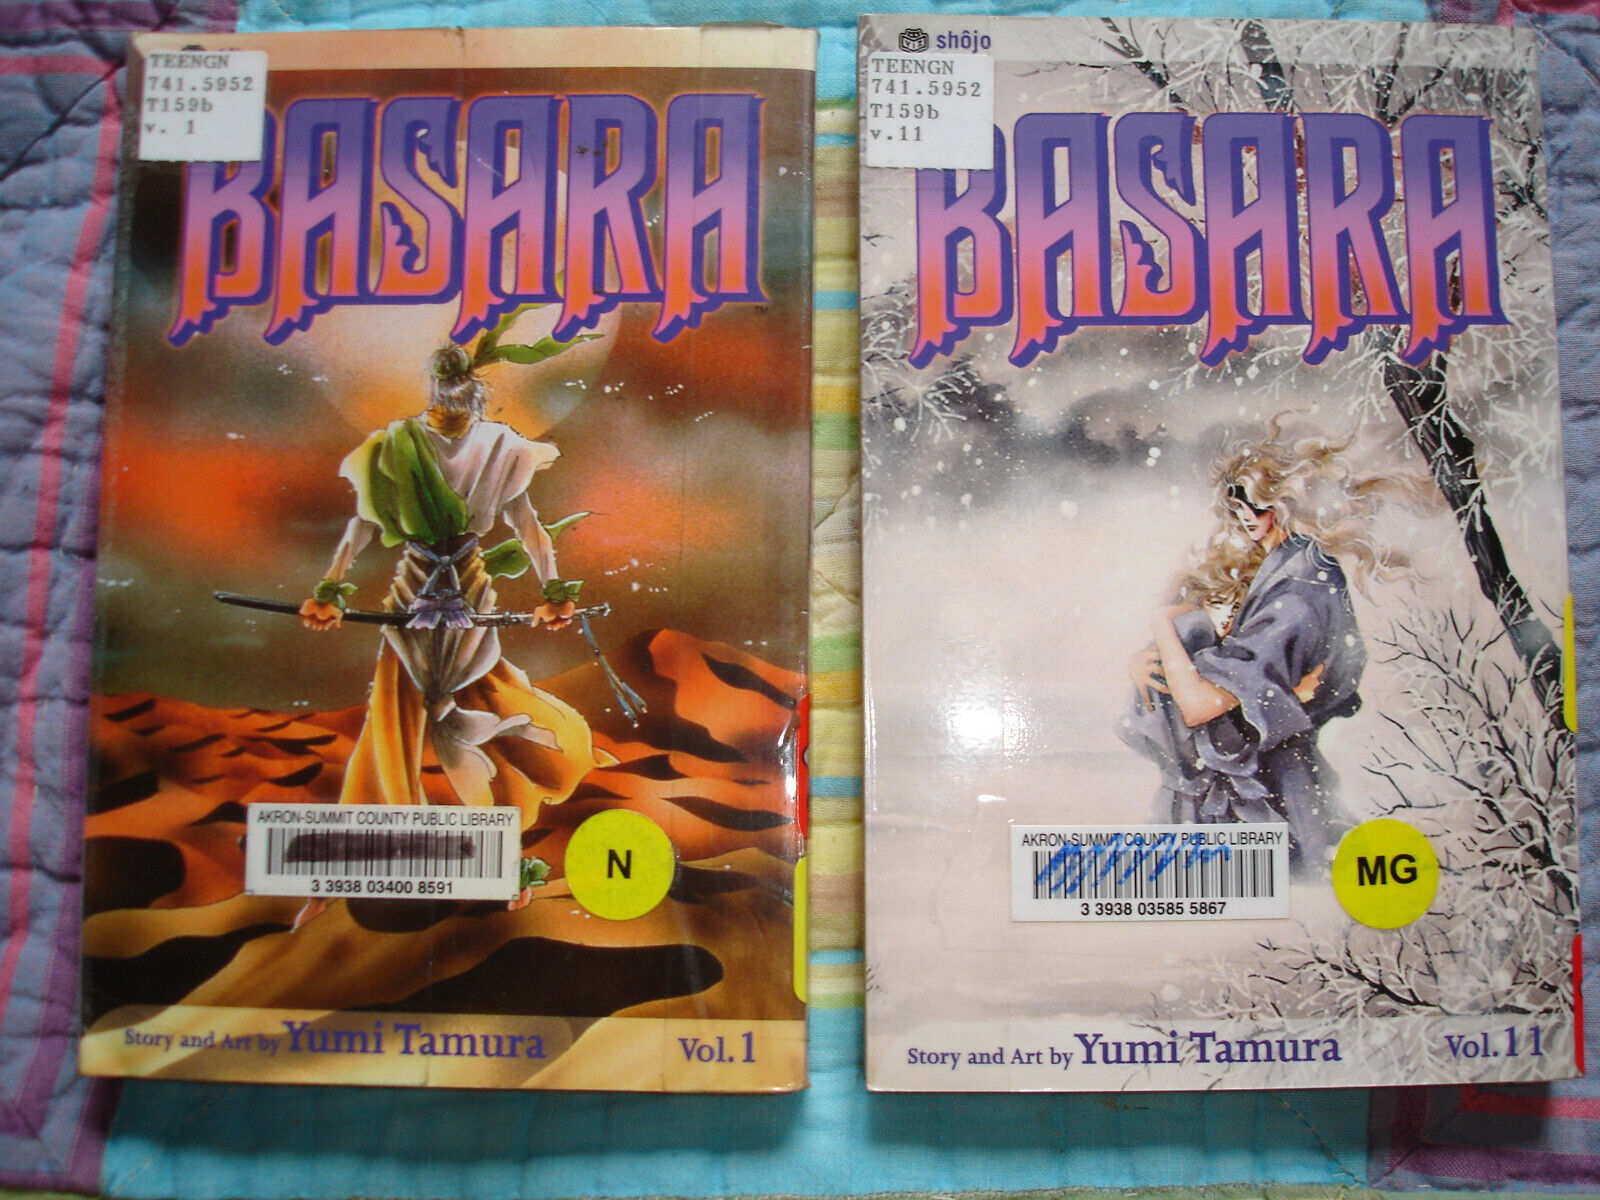 Basara Manga Lot Volume 1 and 11 - by Yumi Tamura - English RARE MANGA OOP